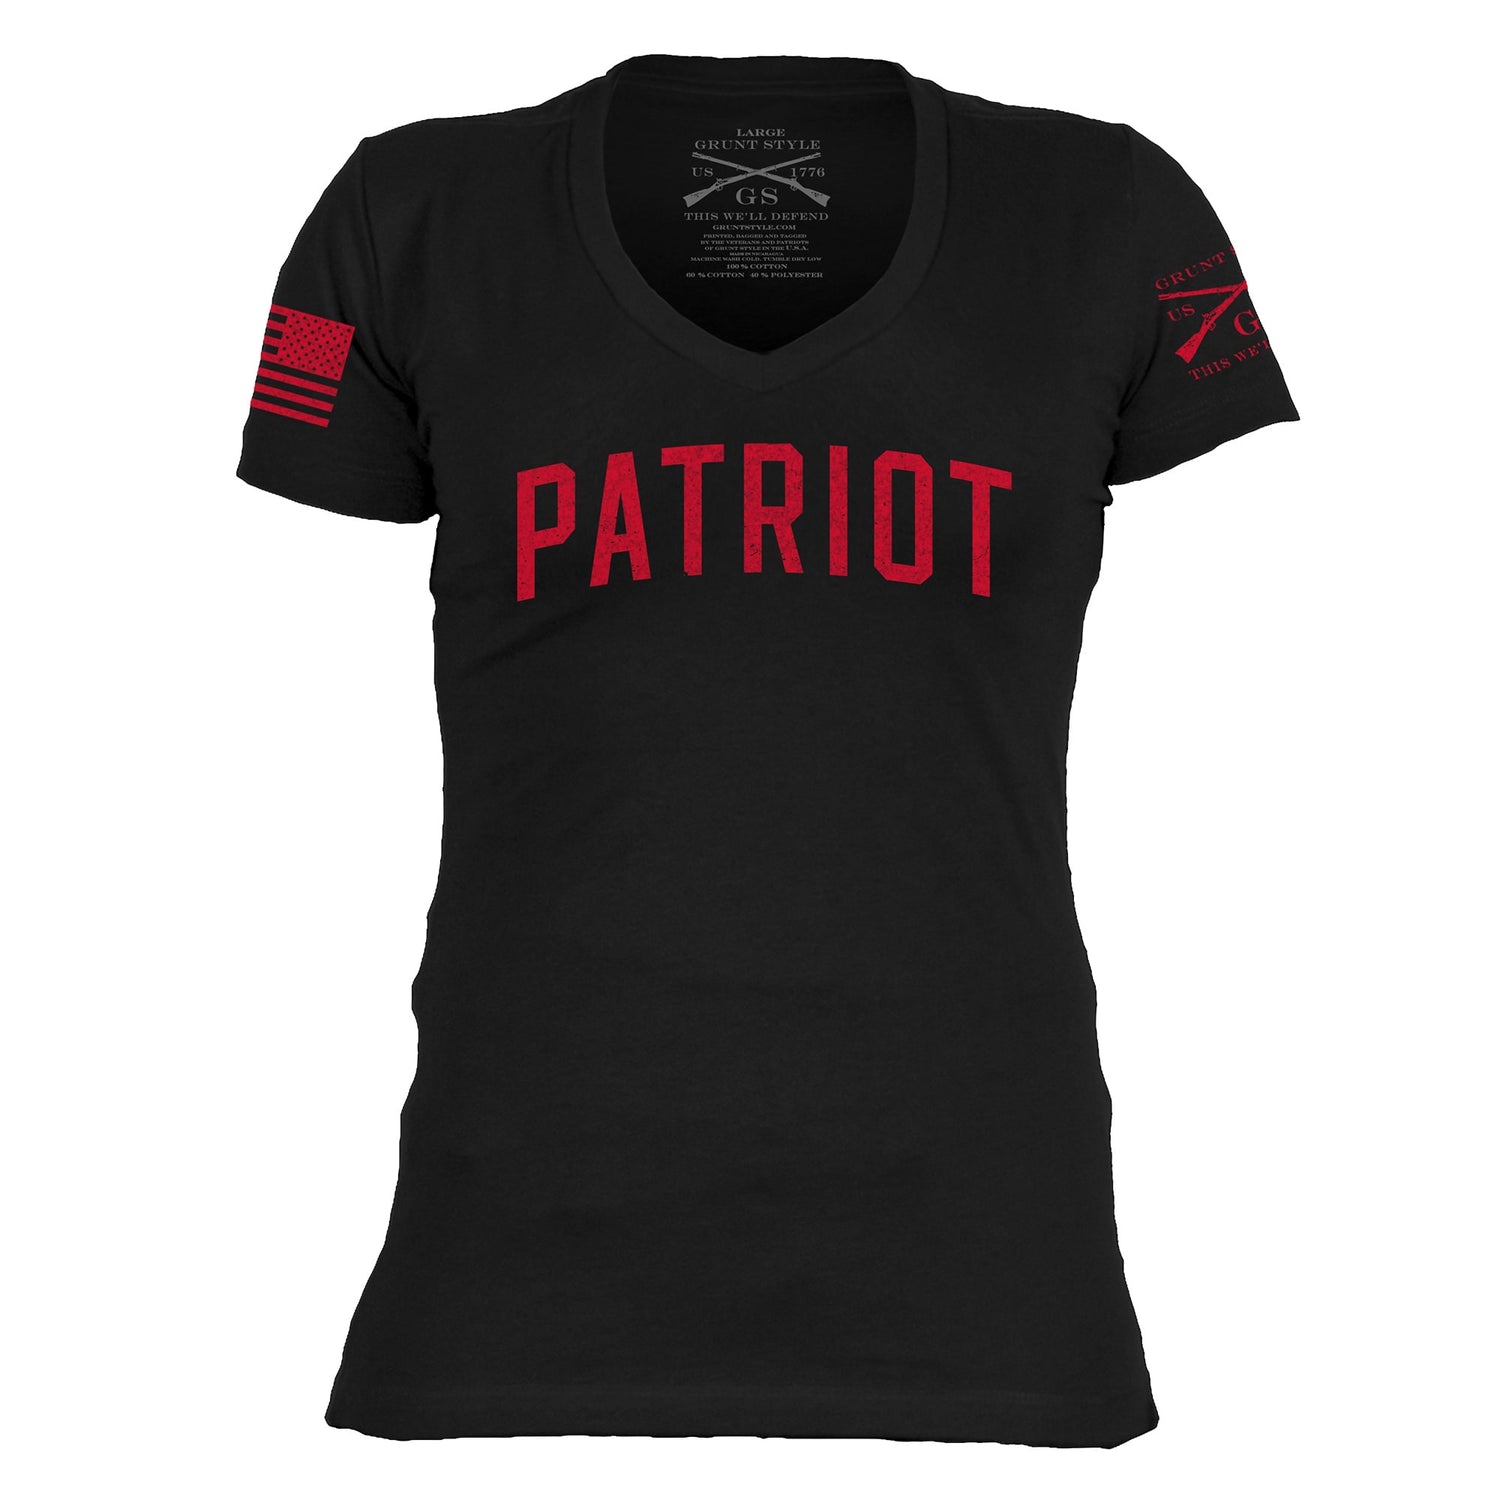 Zero F's Patriot Shirt for Women 